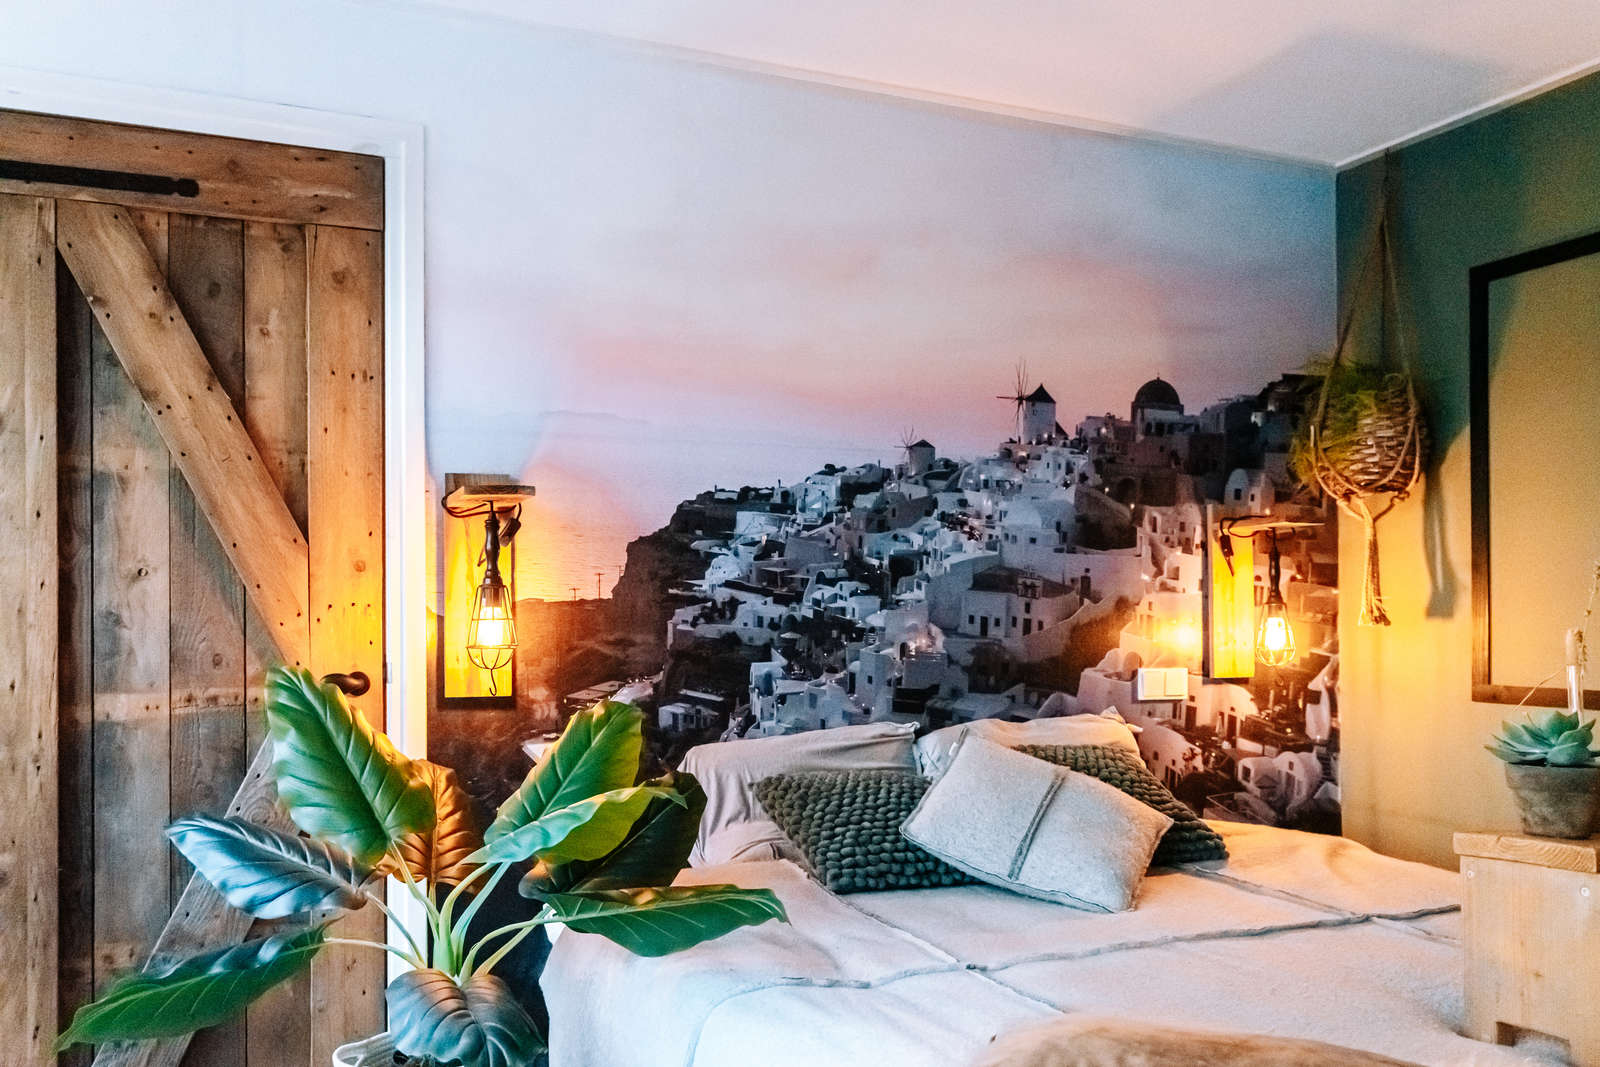             Digital behang Zonsondergang op Santorini - Premium gladde fleece
        